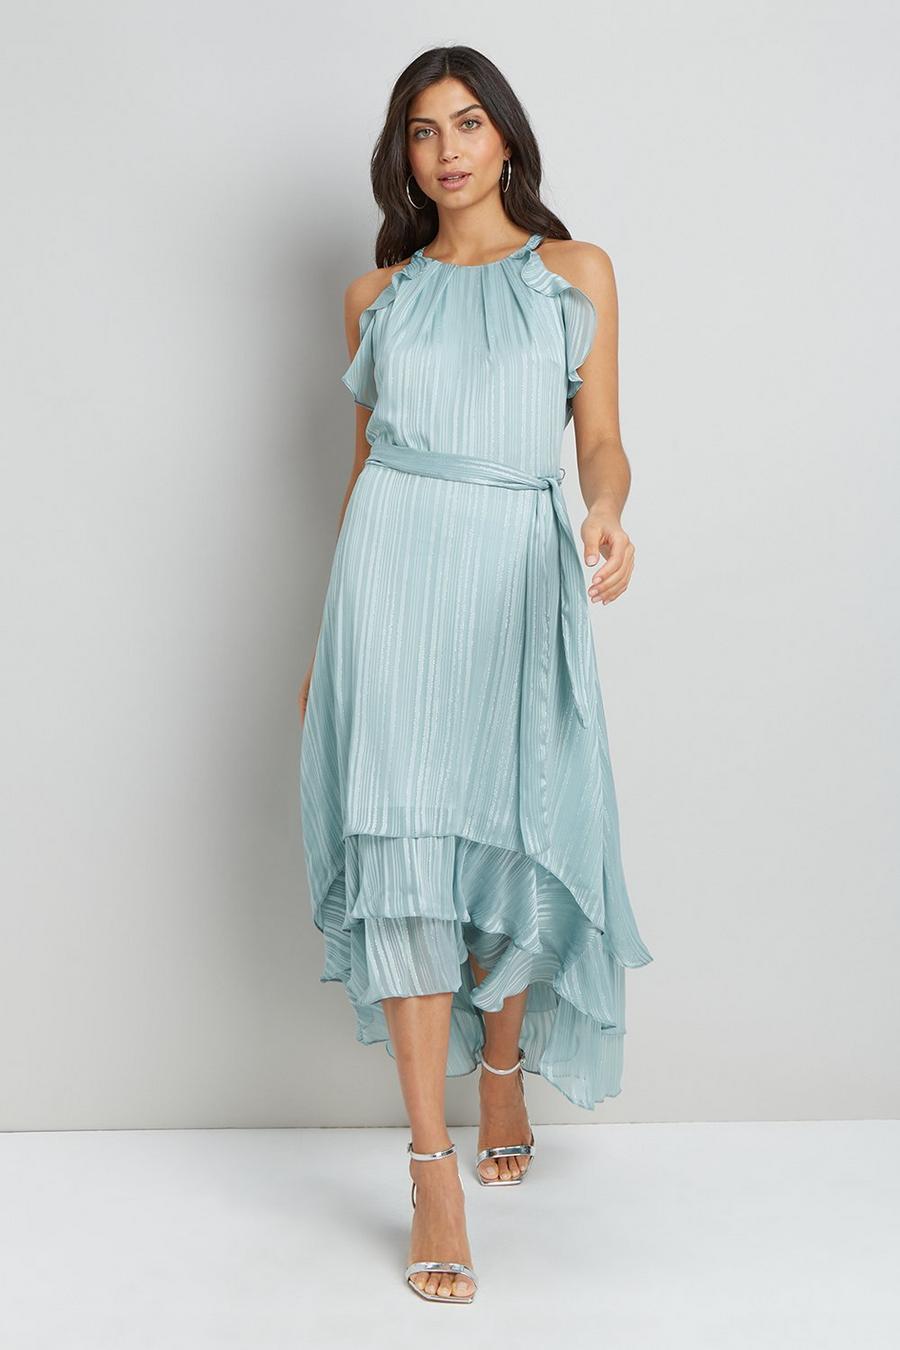 Mint Satin Sparkle Stripe Layered Dress